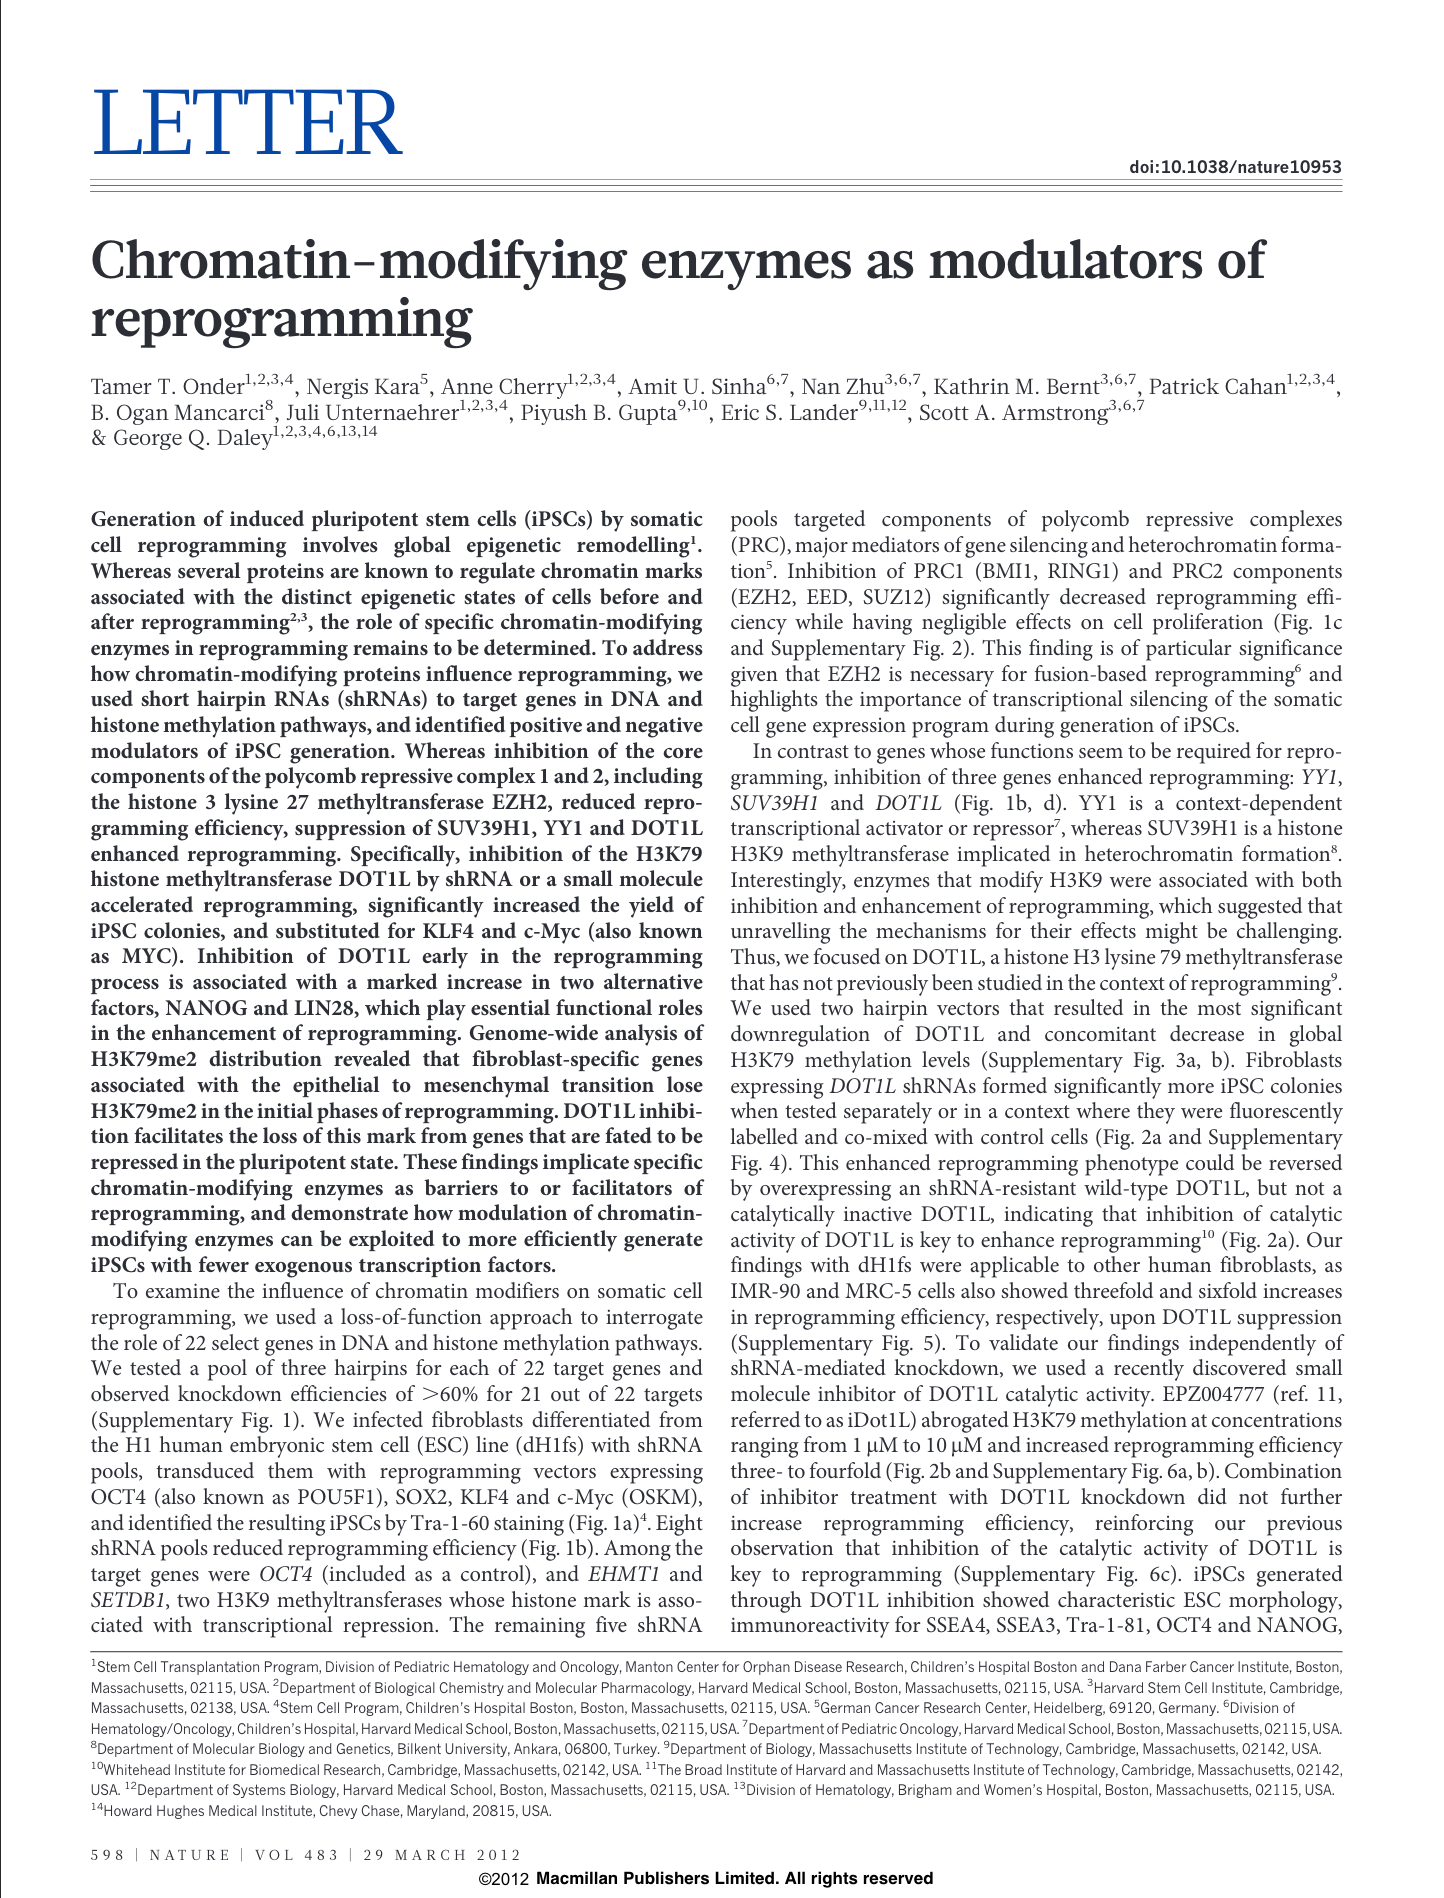 Chromatin-modifying enzymes as modulators of reprogramming